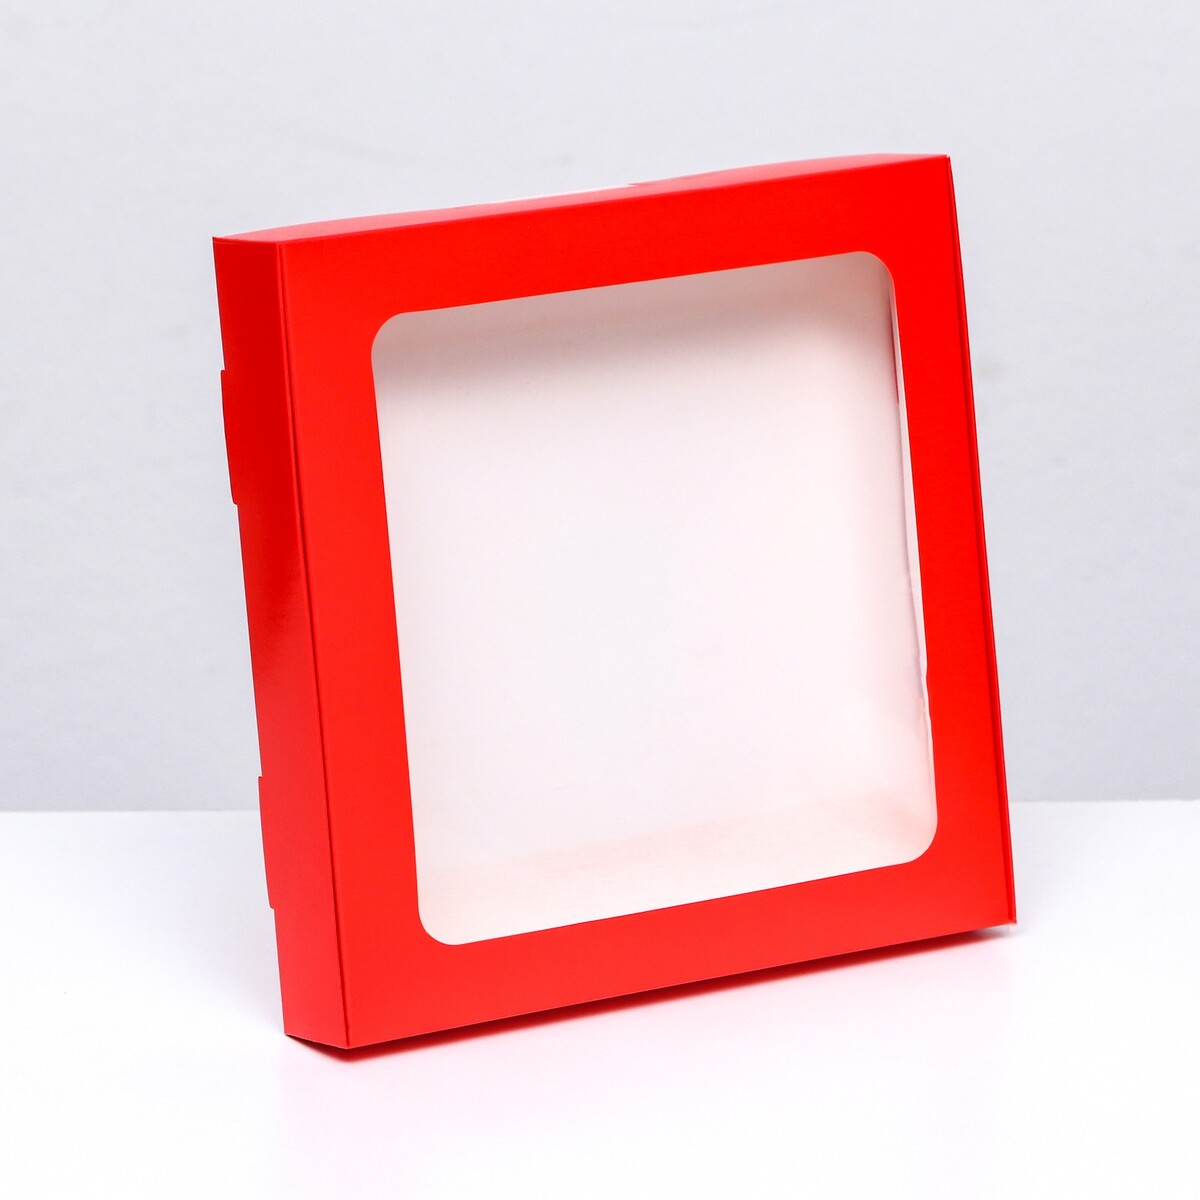 Коробка самосборная, красная с окном, 19 х 19 х 3 см коробка самосборная с окном мятная 16 х 16 х 3 см